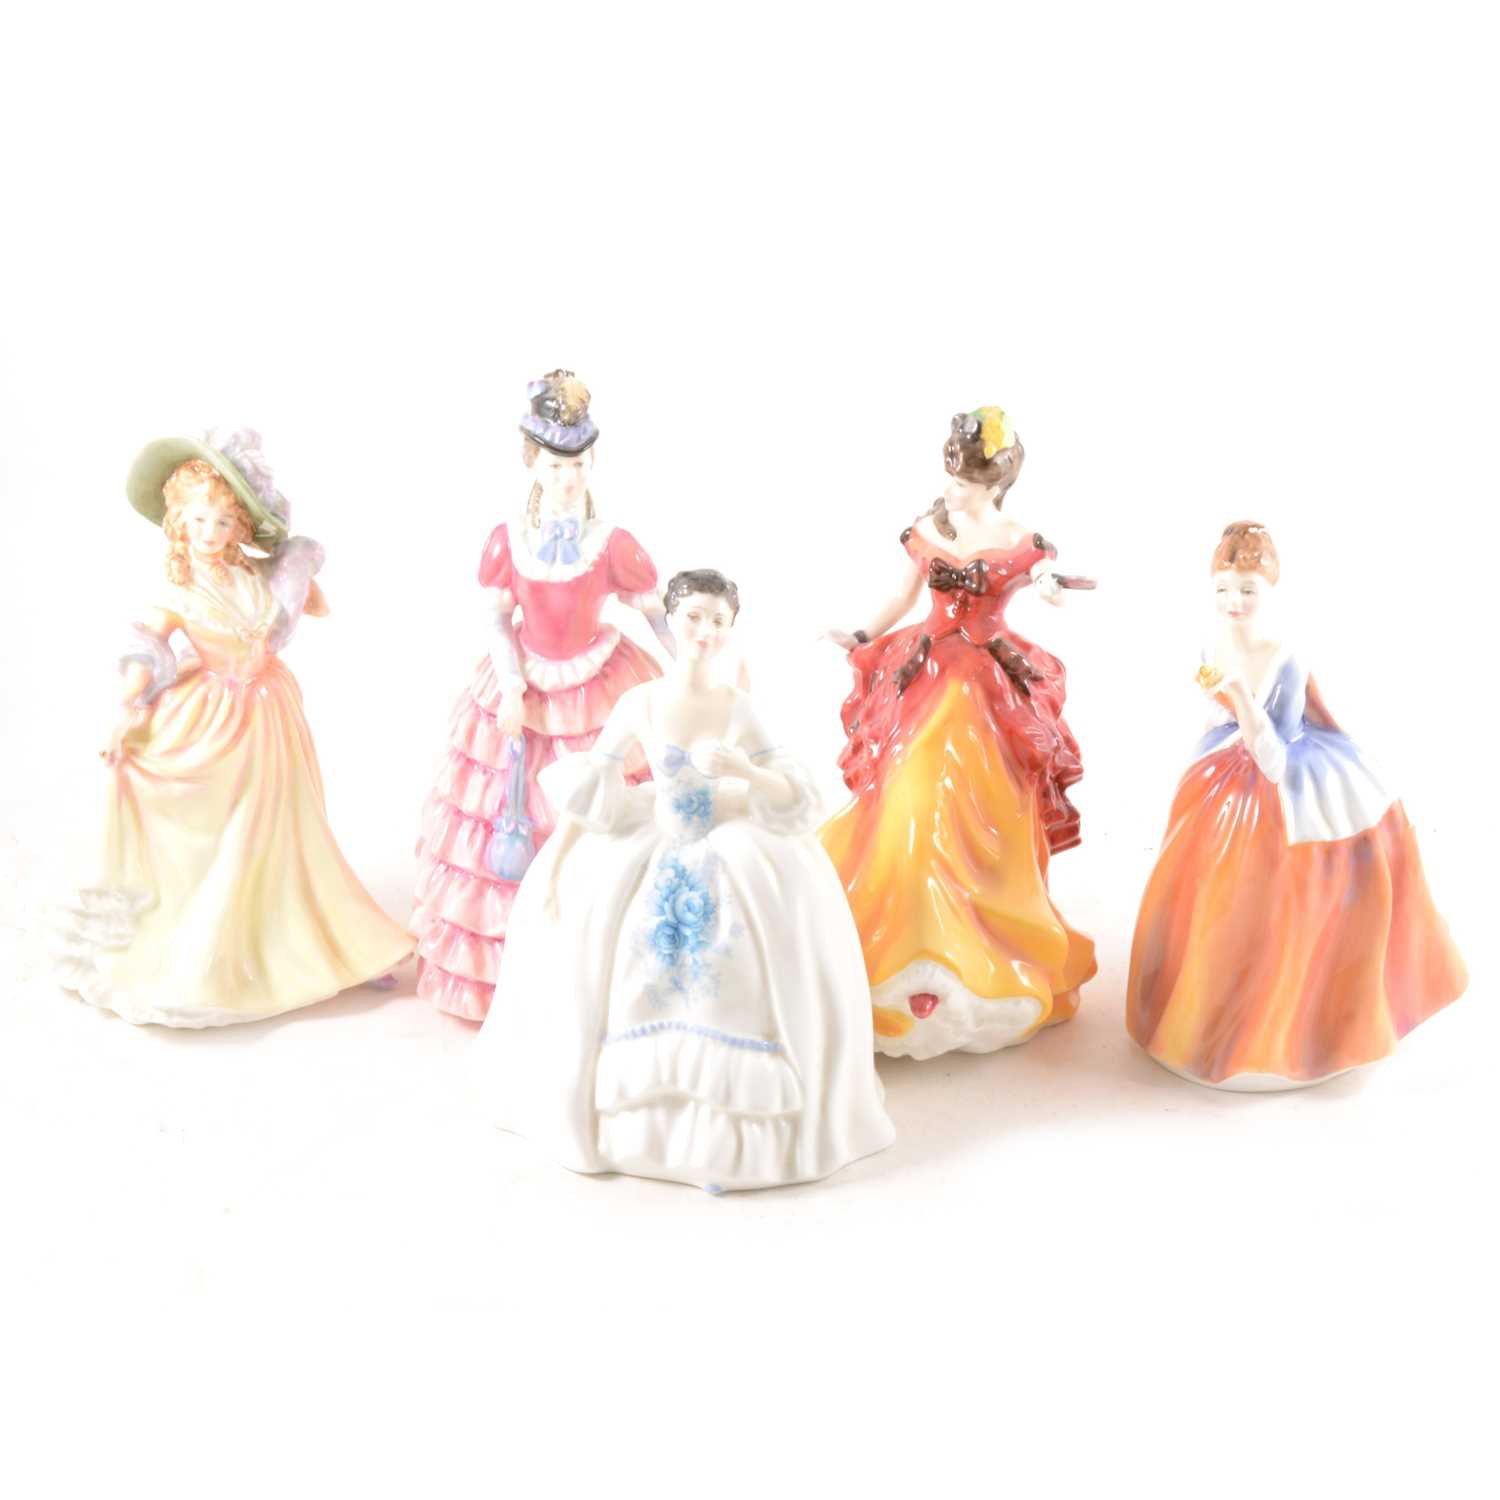 Lot 2 - Five Royal Doulton figurines